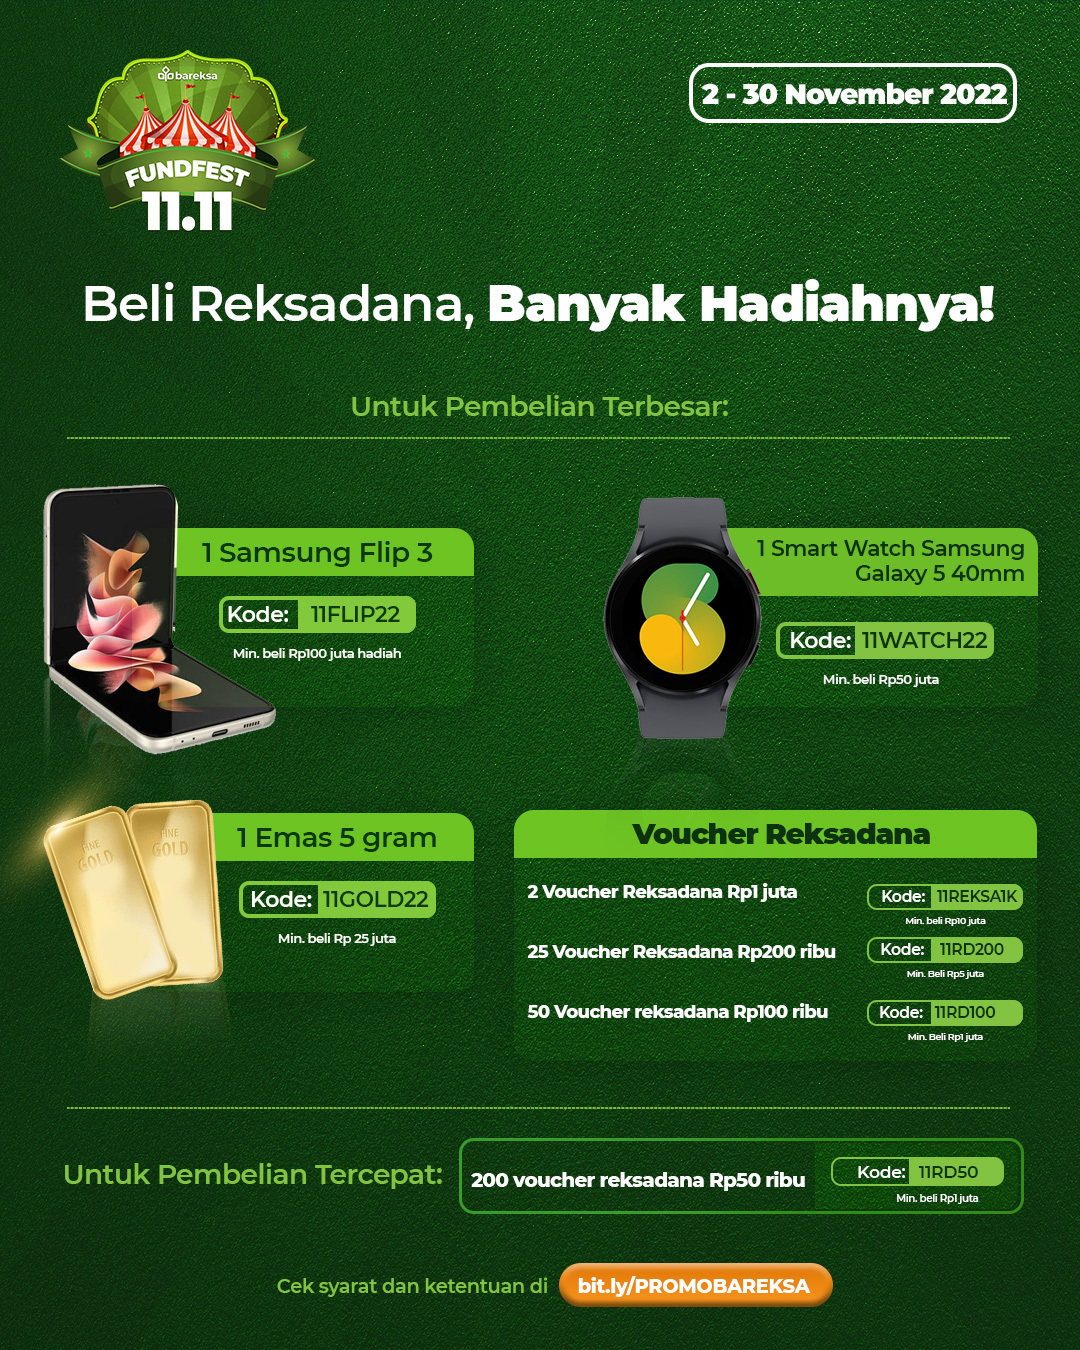 Promo FundFest 11.11 Beli Reksadana Berhadiah Smartphone, Emas hingga Voucher 